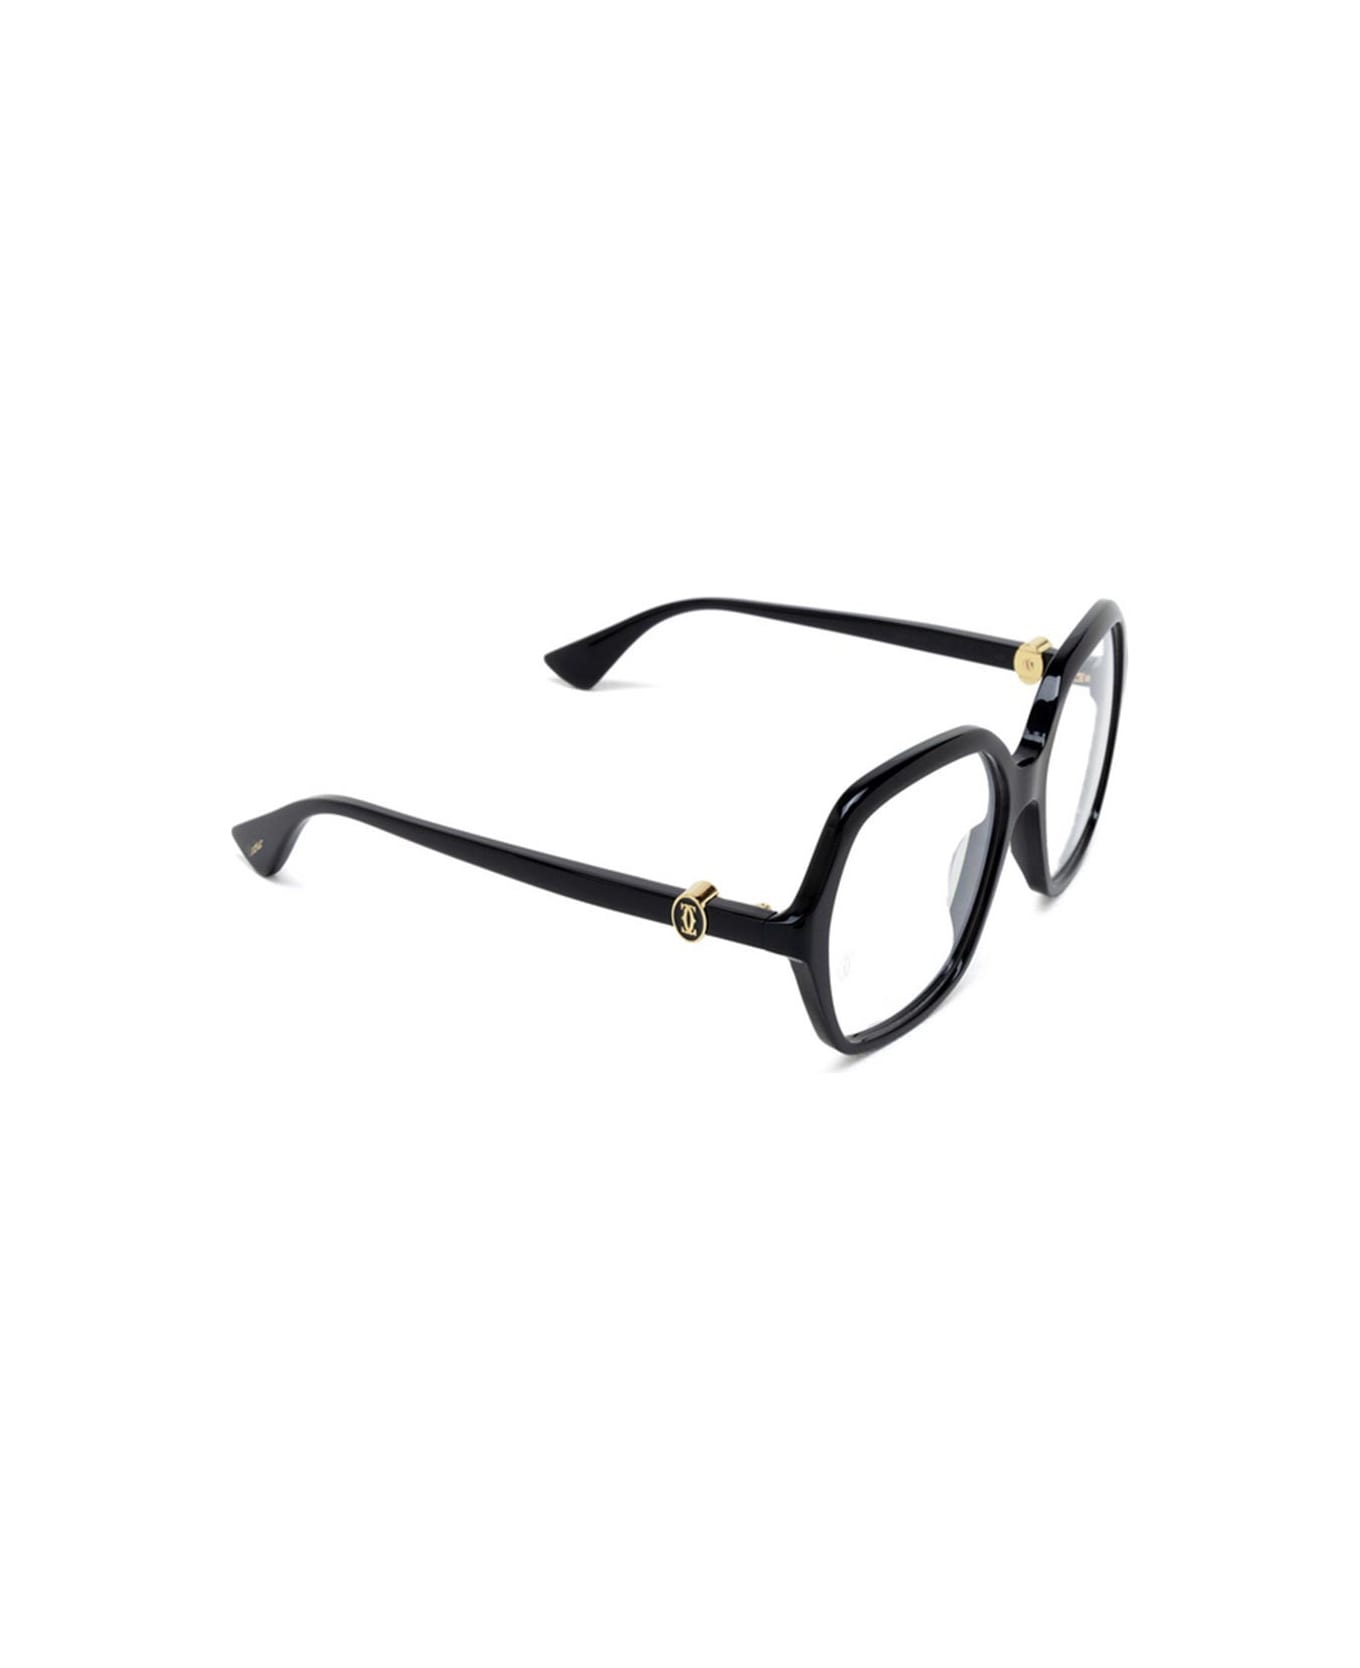 Cartier Eyewear Glasses - Nero アイウェア